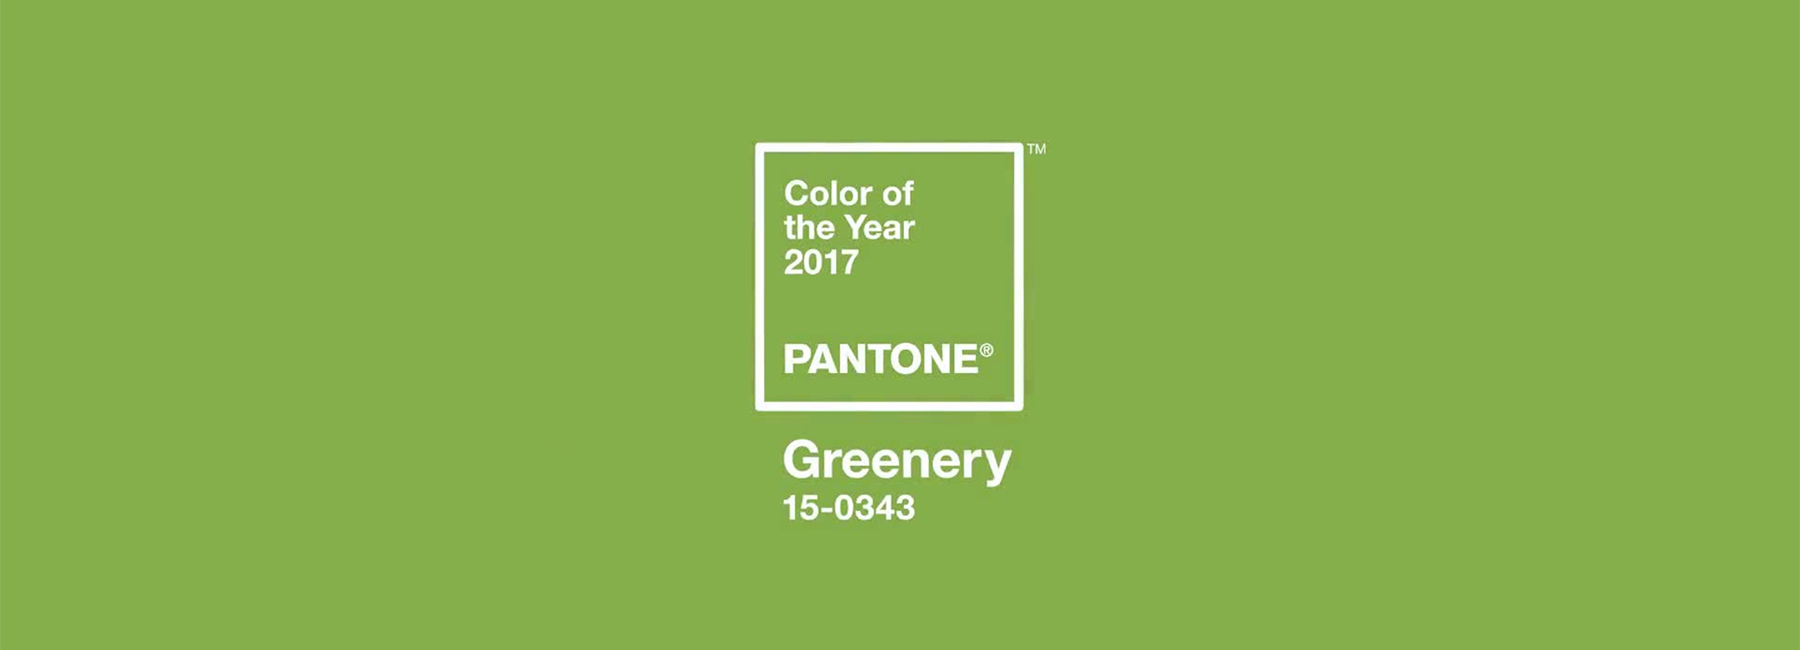 pantone-color-of-the-yeat-2017-designboom-1800